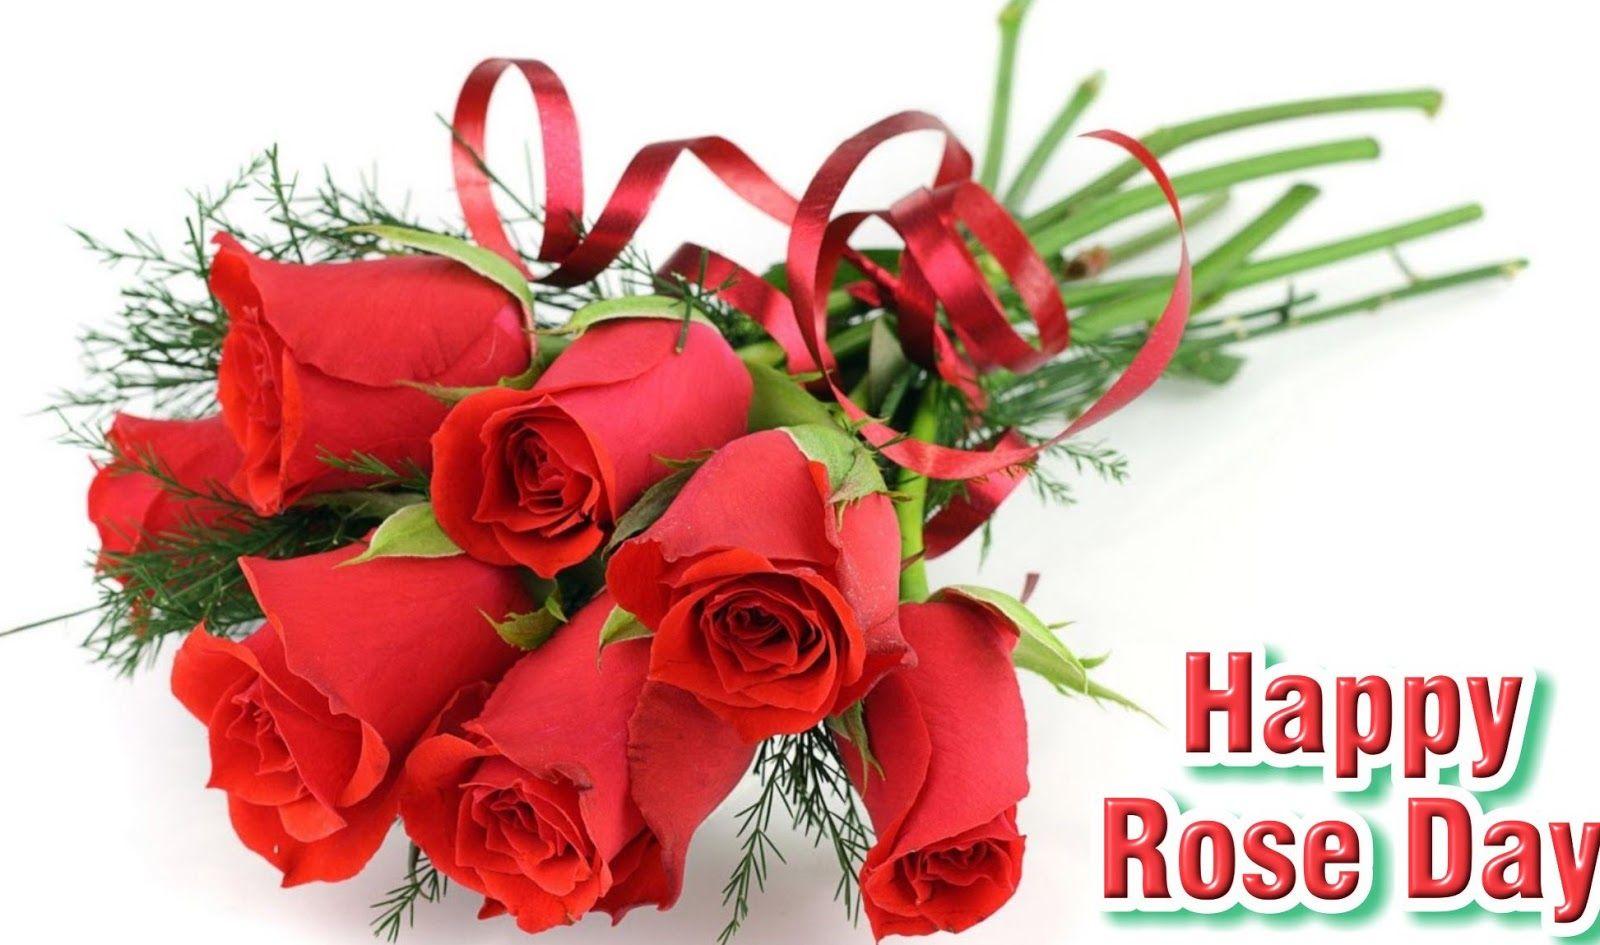 Happy Rose Day 2019 Image, Quotes, Wishes & Shayari